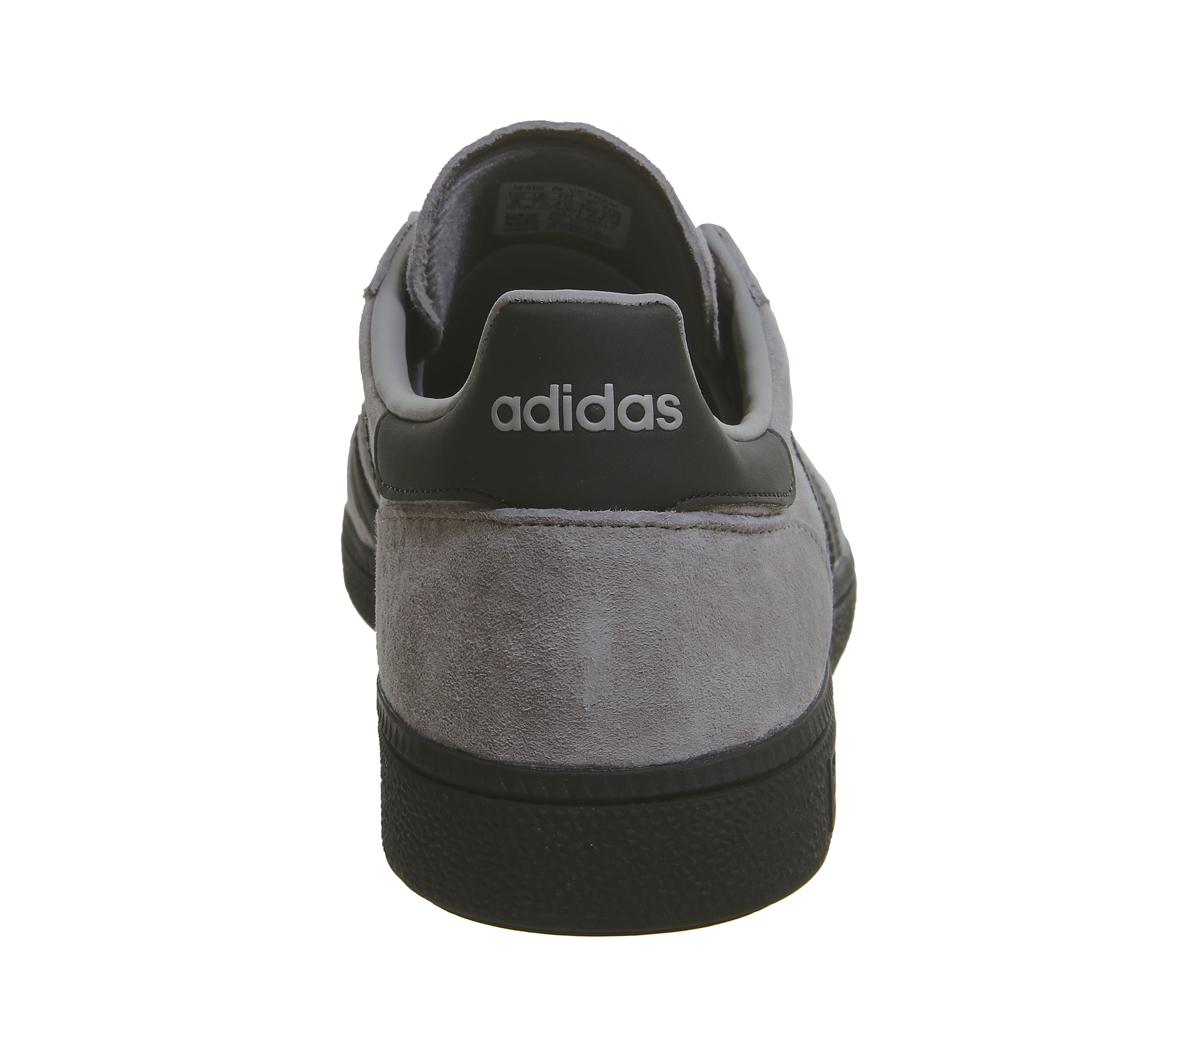 adidas spezial grey and black